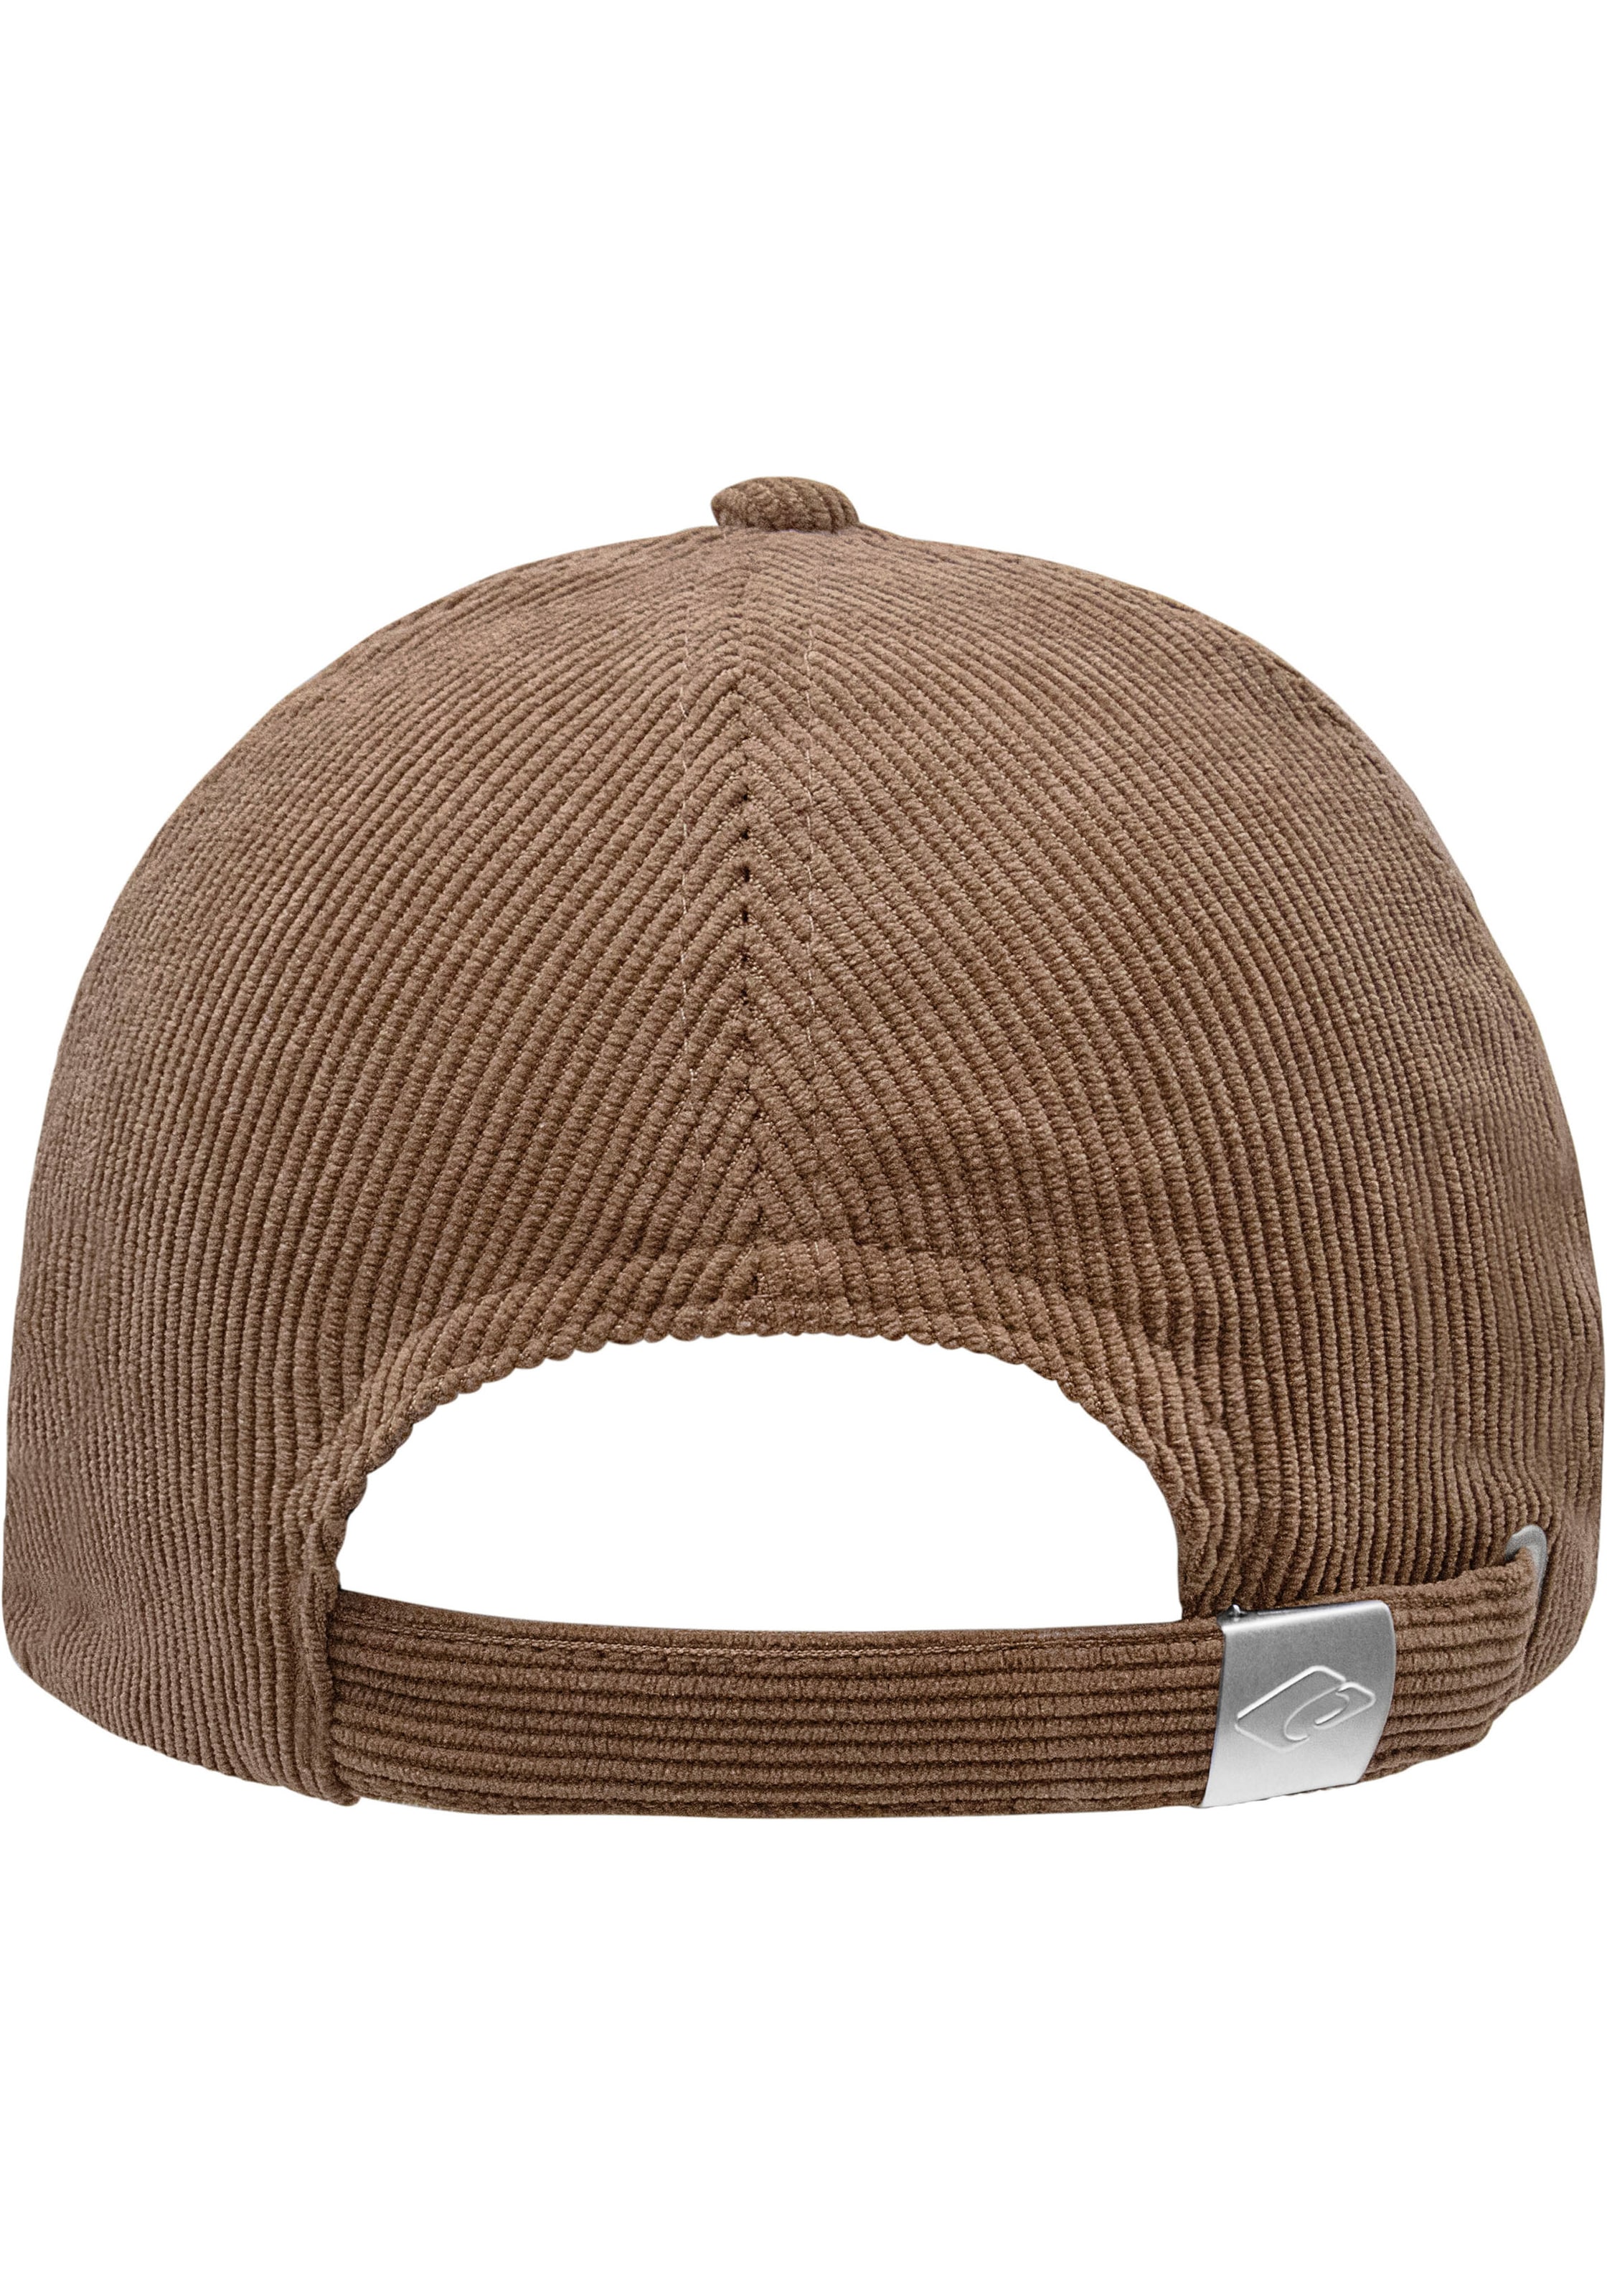 chillouts Baseball Cap, Weikoloa Hat